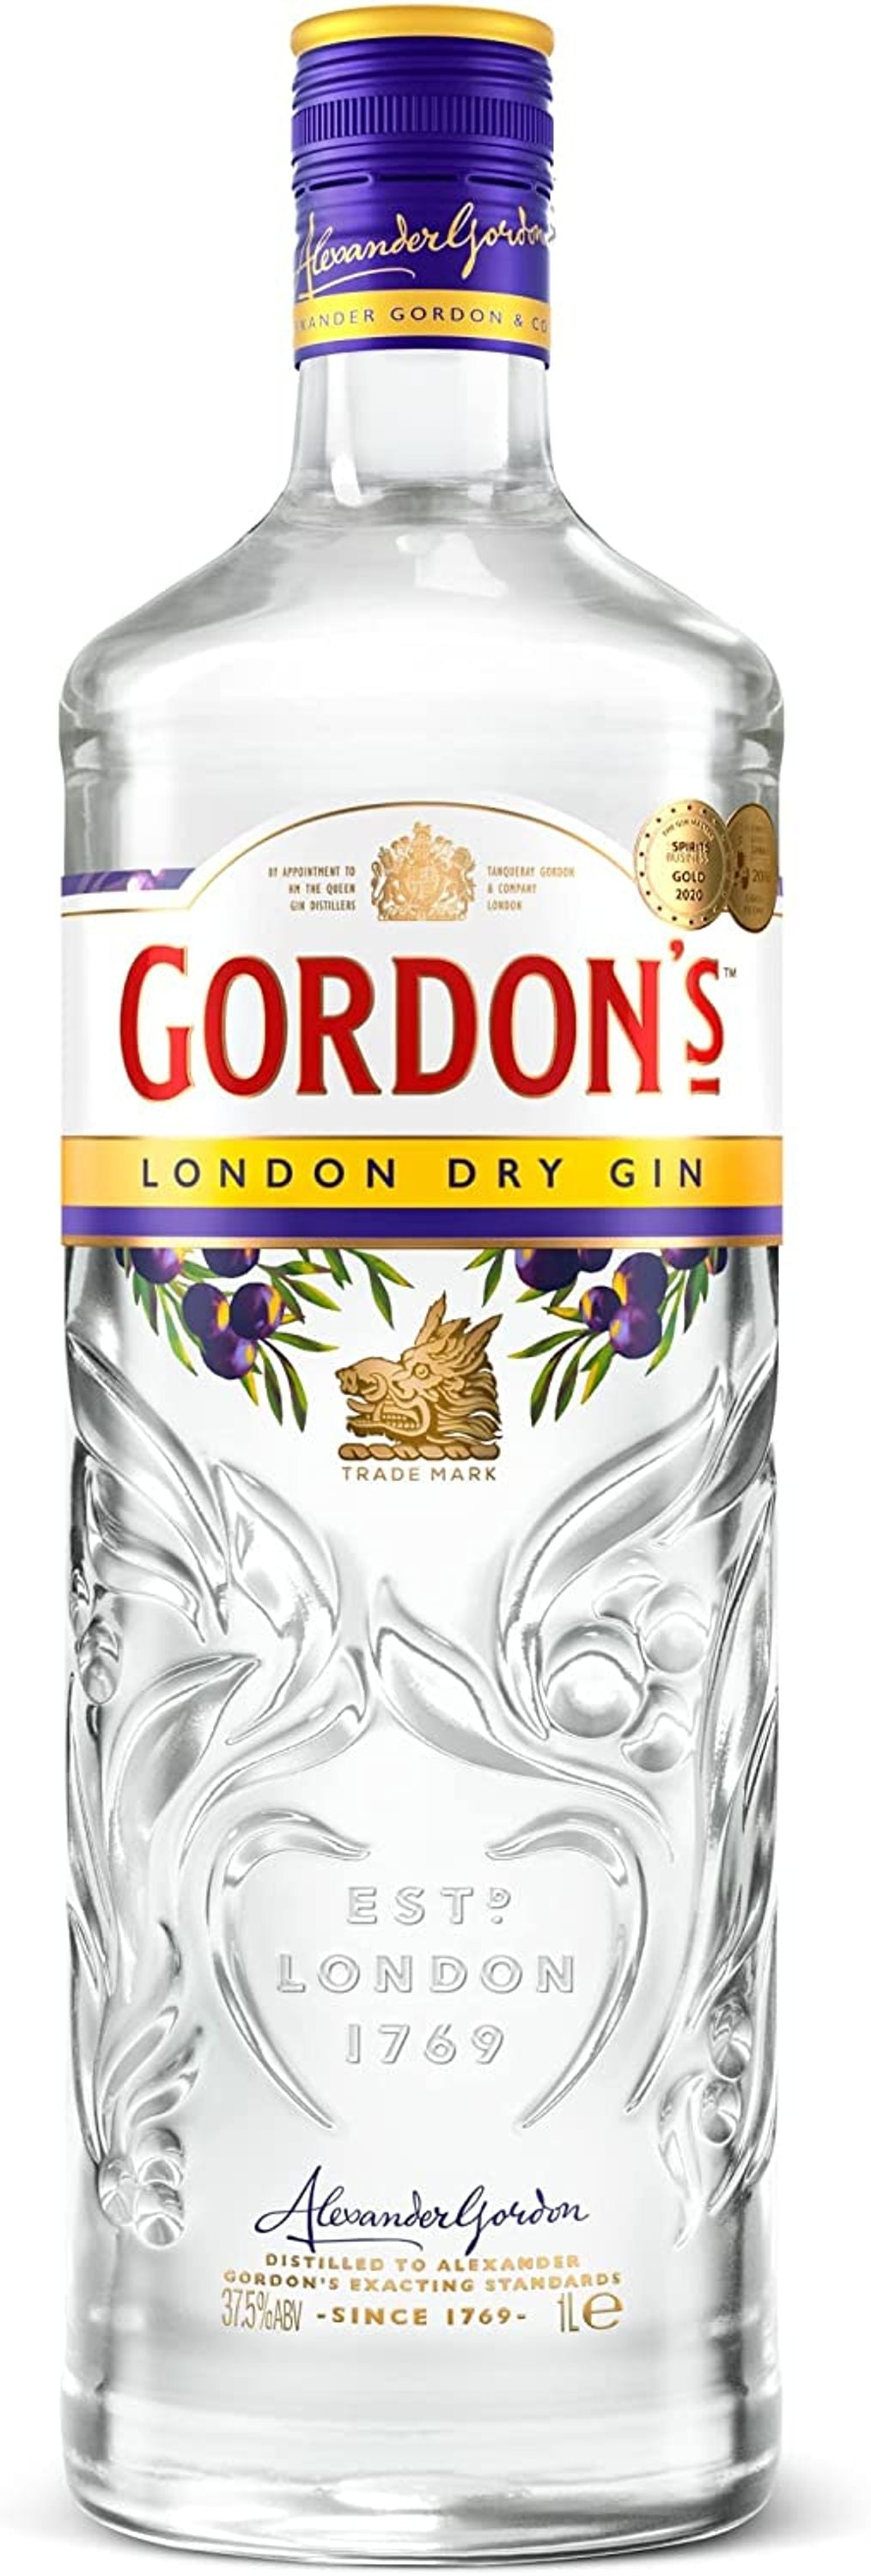 Gordon's London Dry Gin 0.7l, alc. 37.5% ABV, Gin England